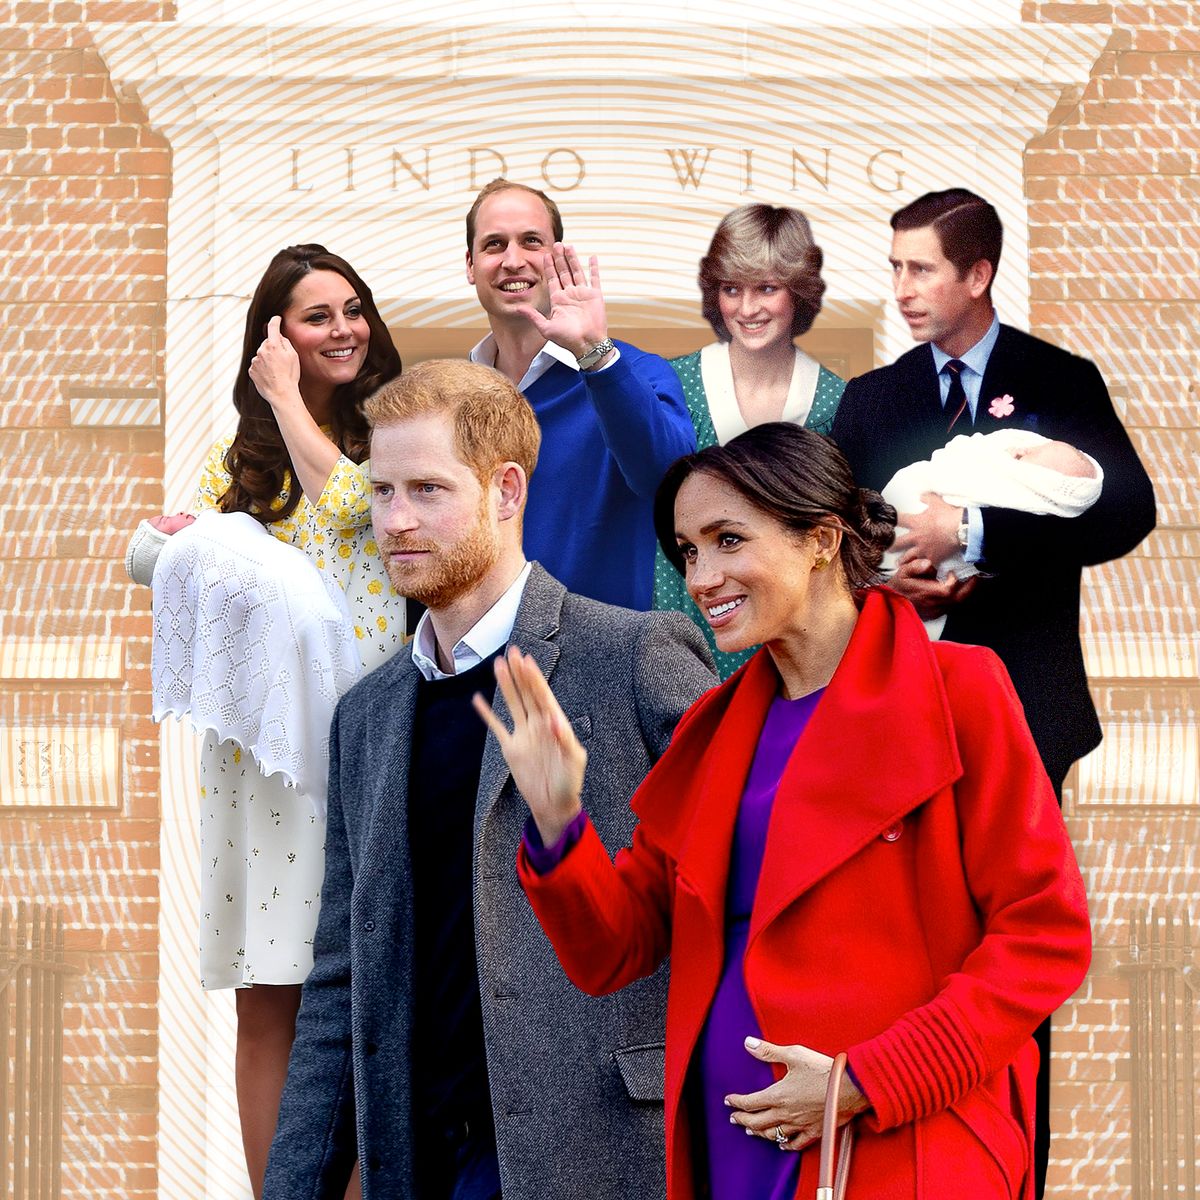 royal family lindo wing photos